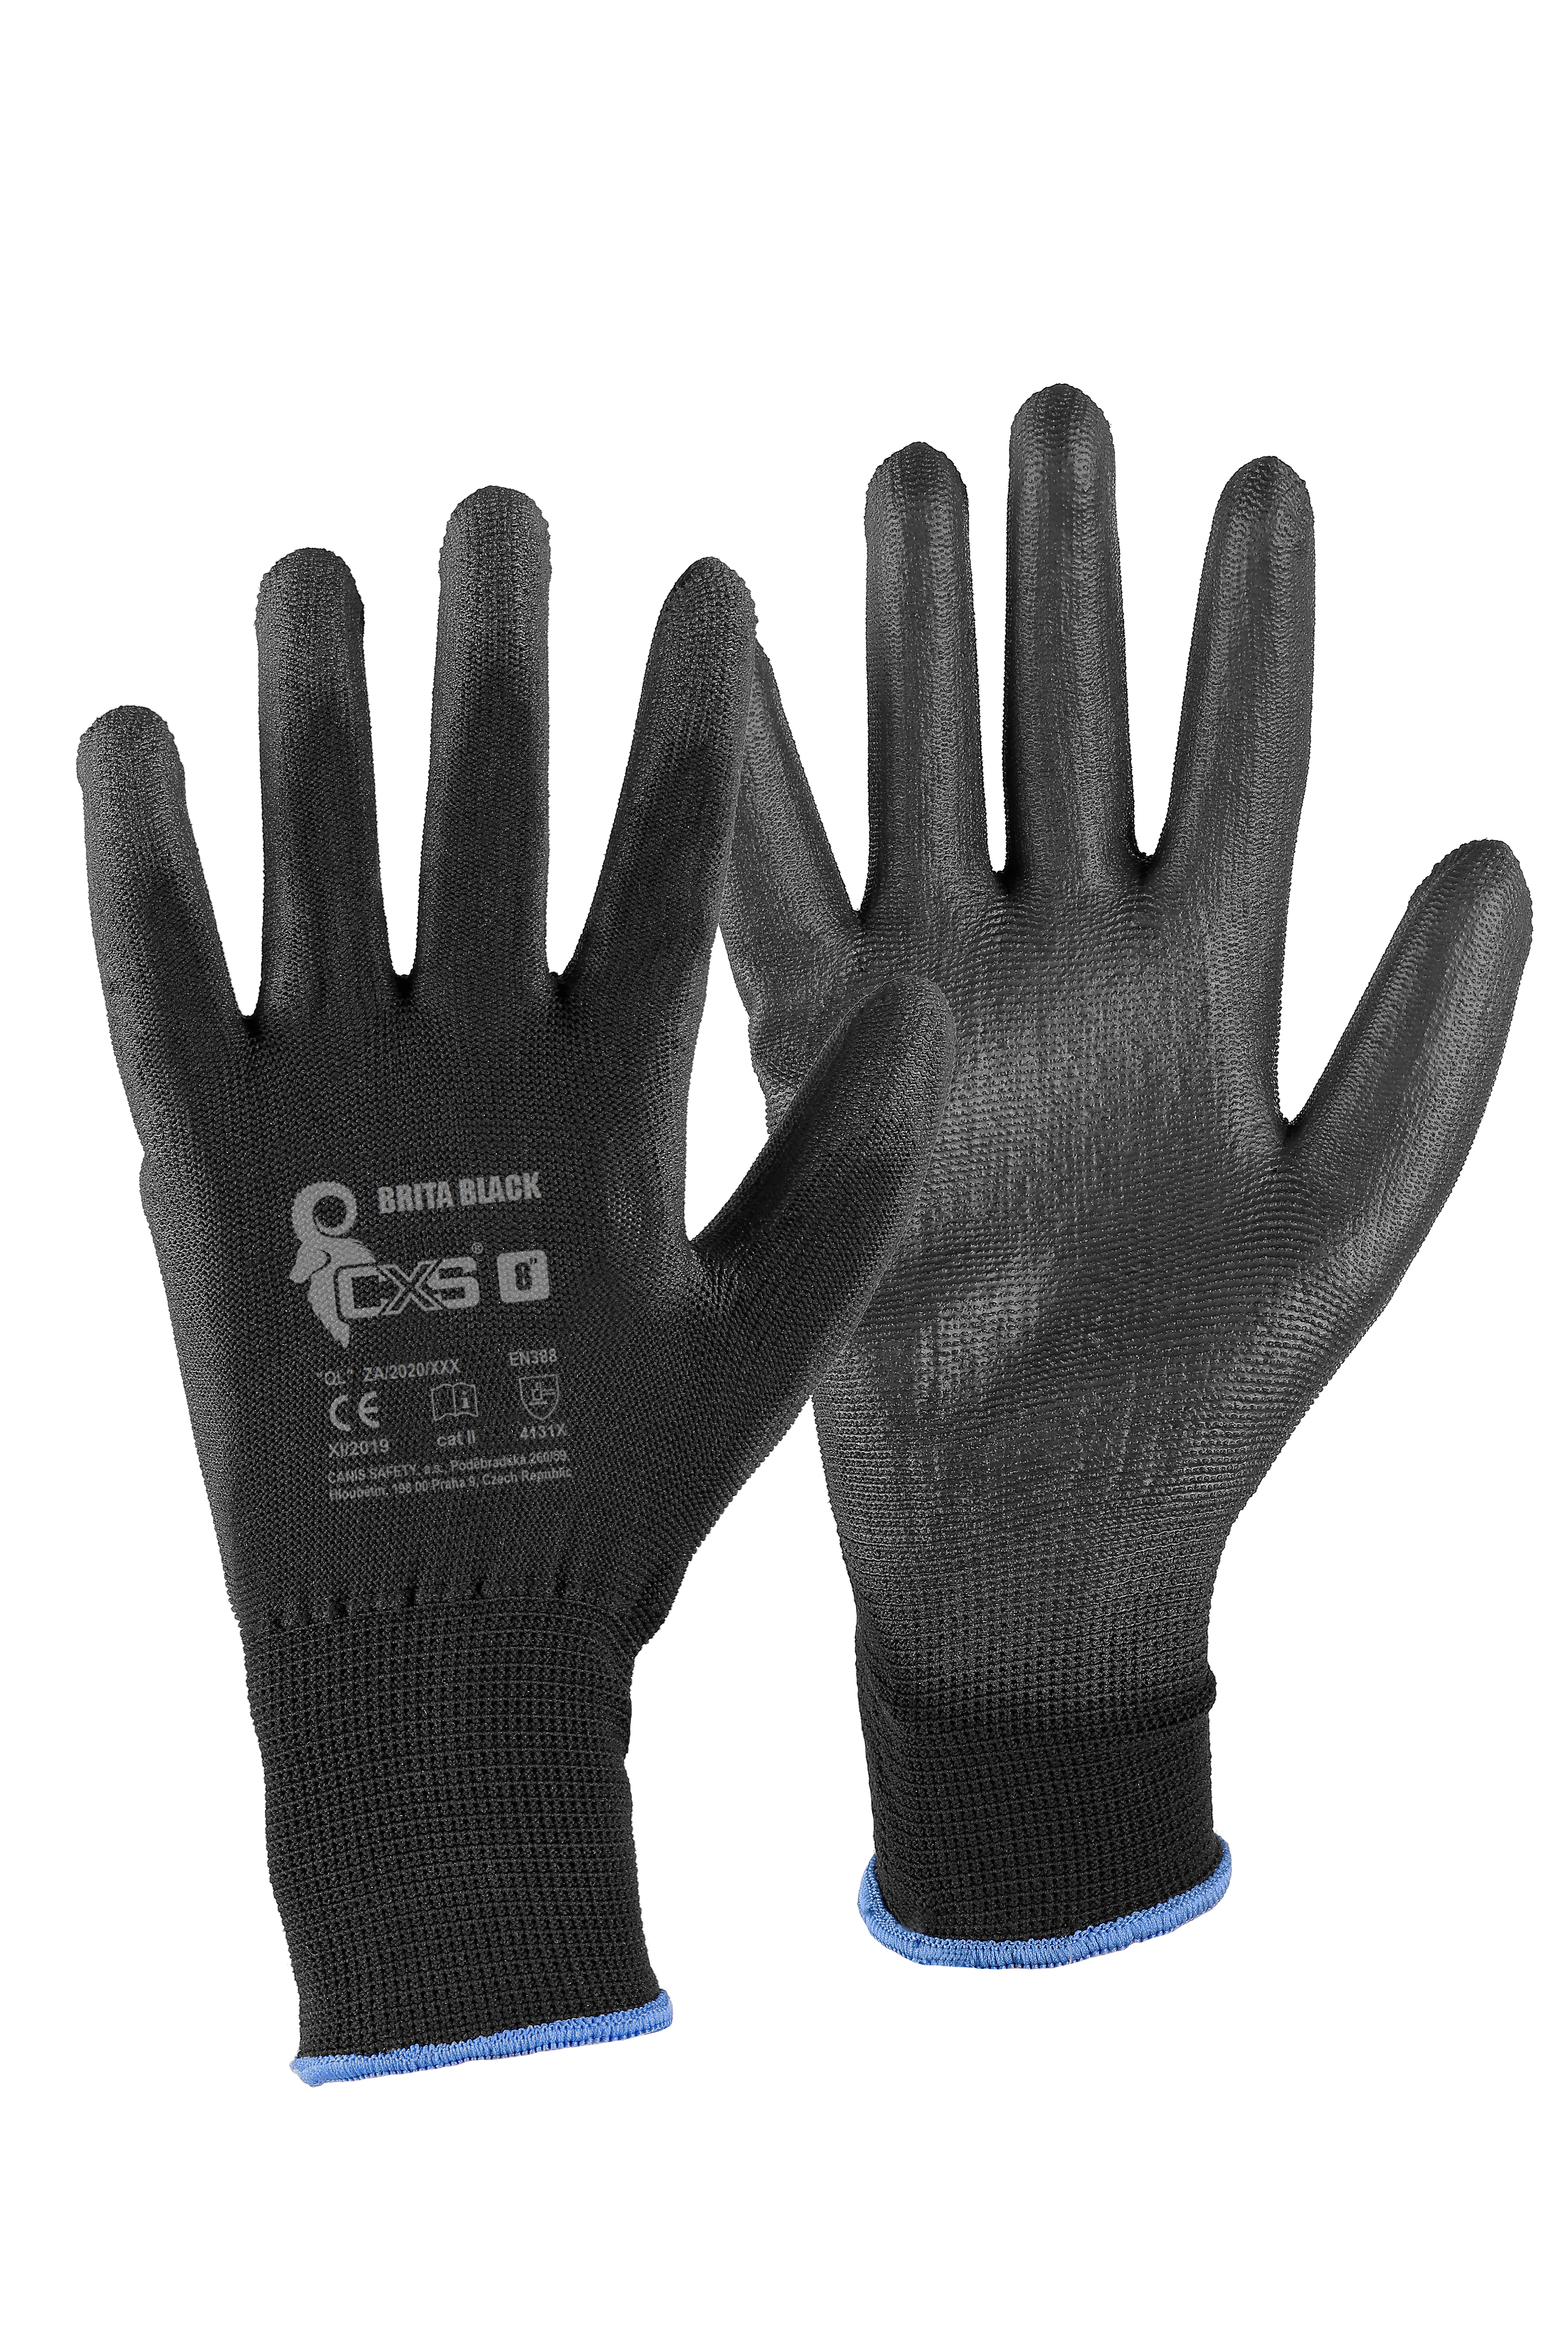 rukavice BRITA BLACK, s PU dlaní a úpletem, velikost 9 0.02 Kg TOP Sklad4 606048 15